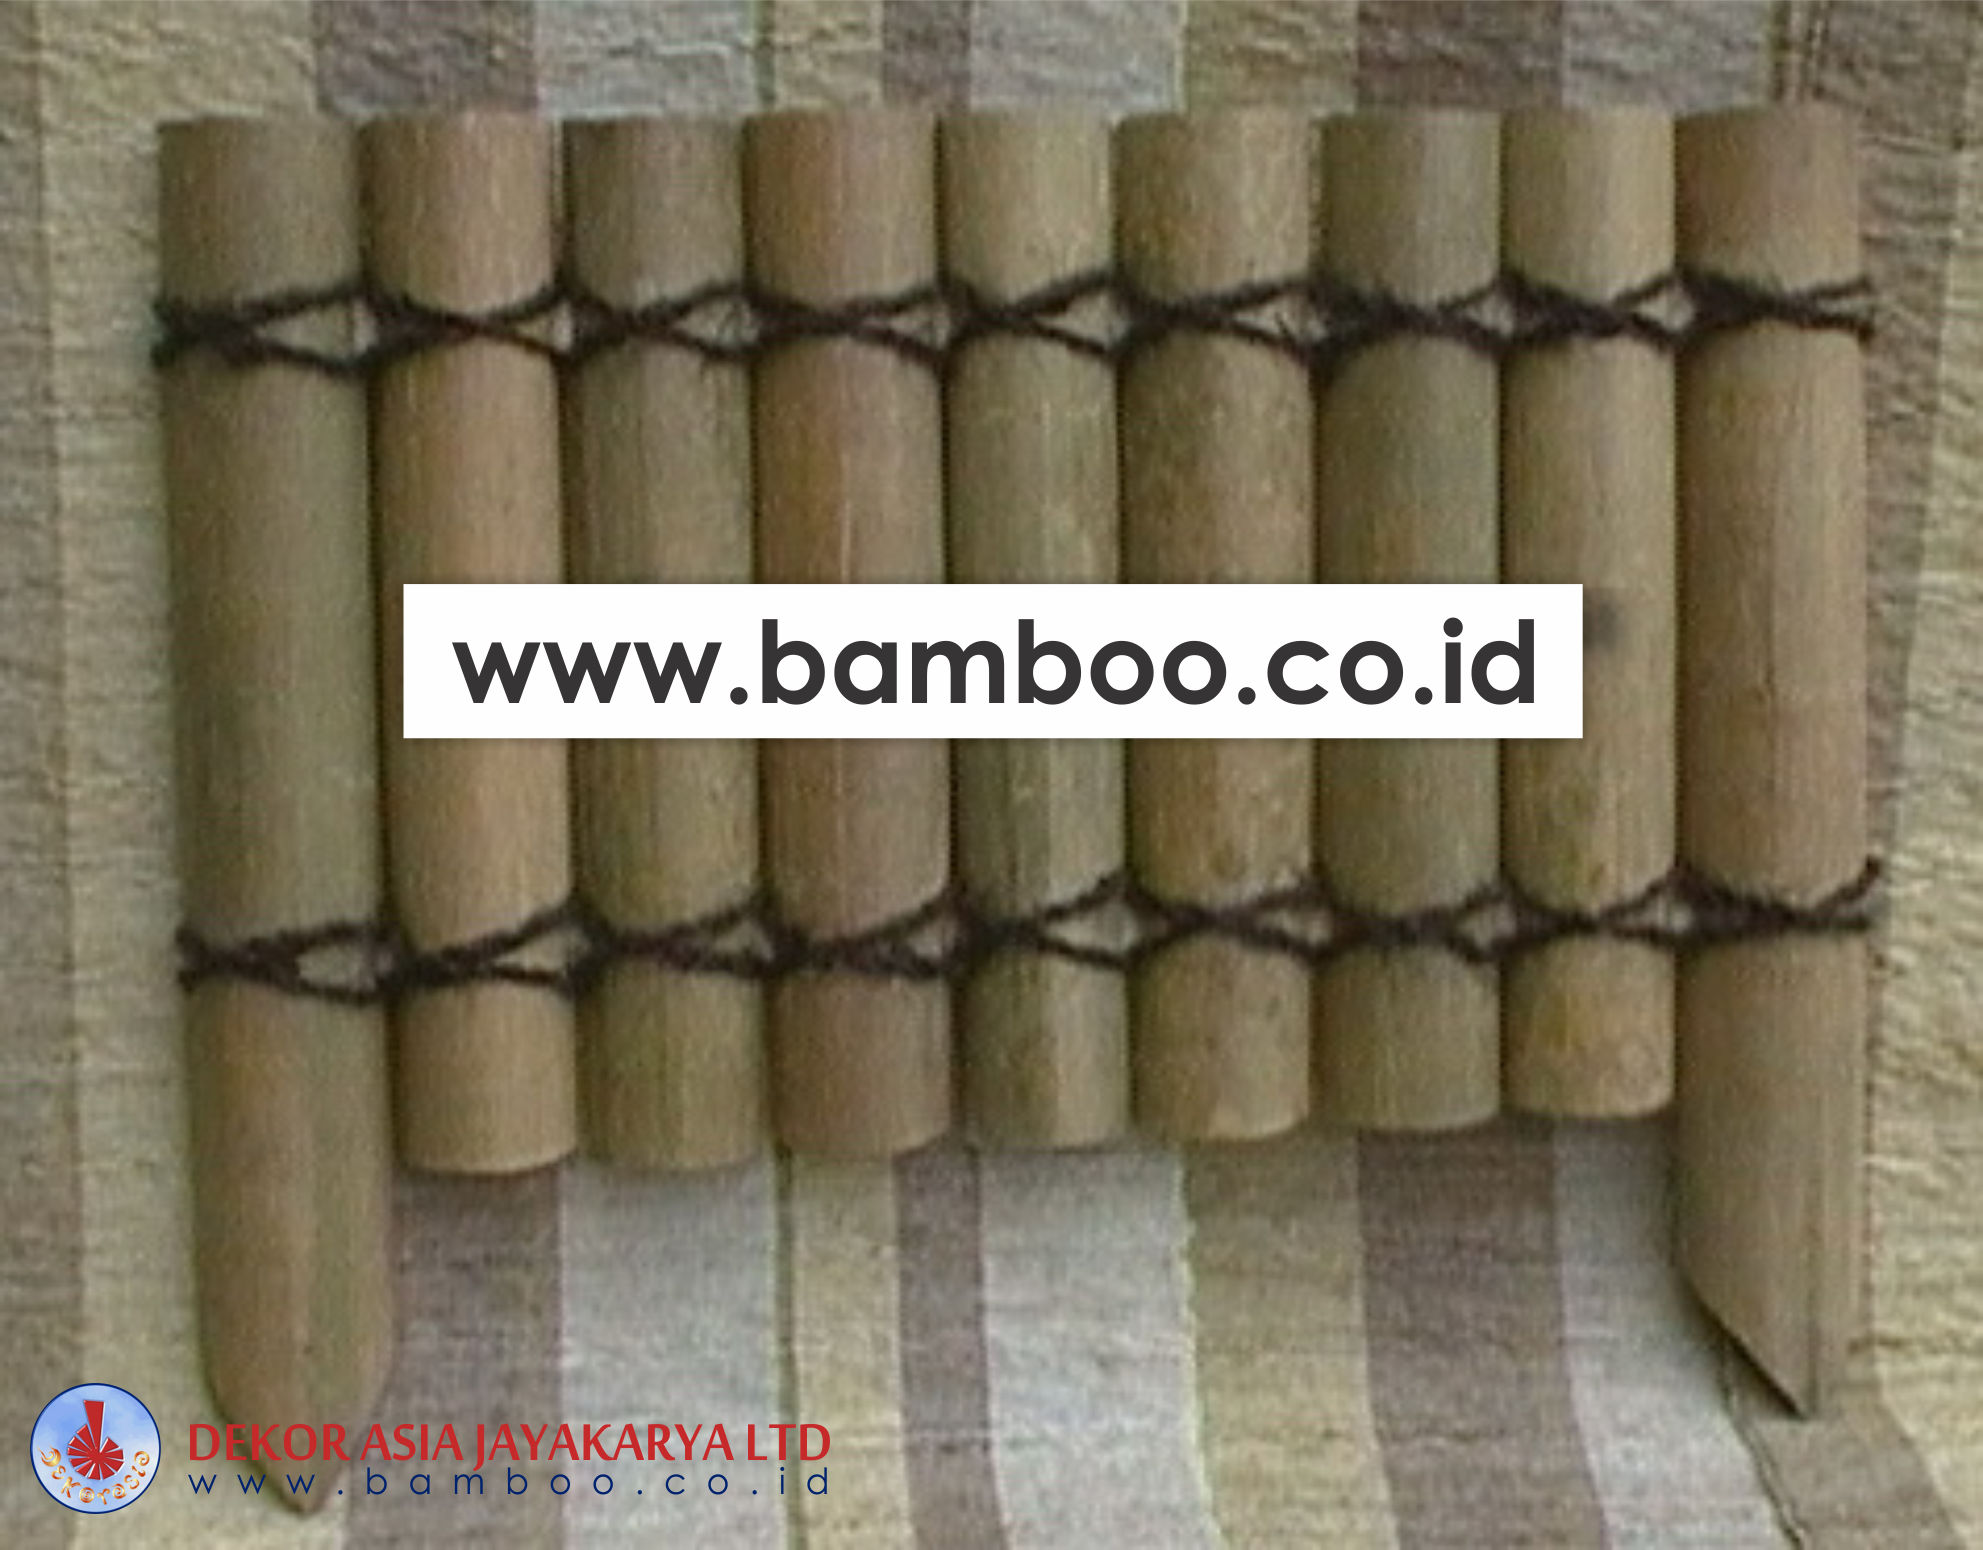 Bamboo Border Edging Natural - Bamboo Edging - Bamboo Borders